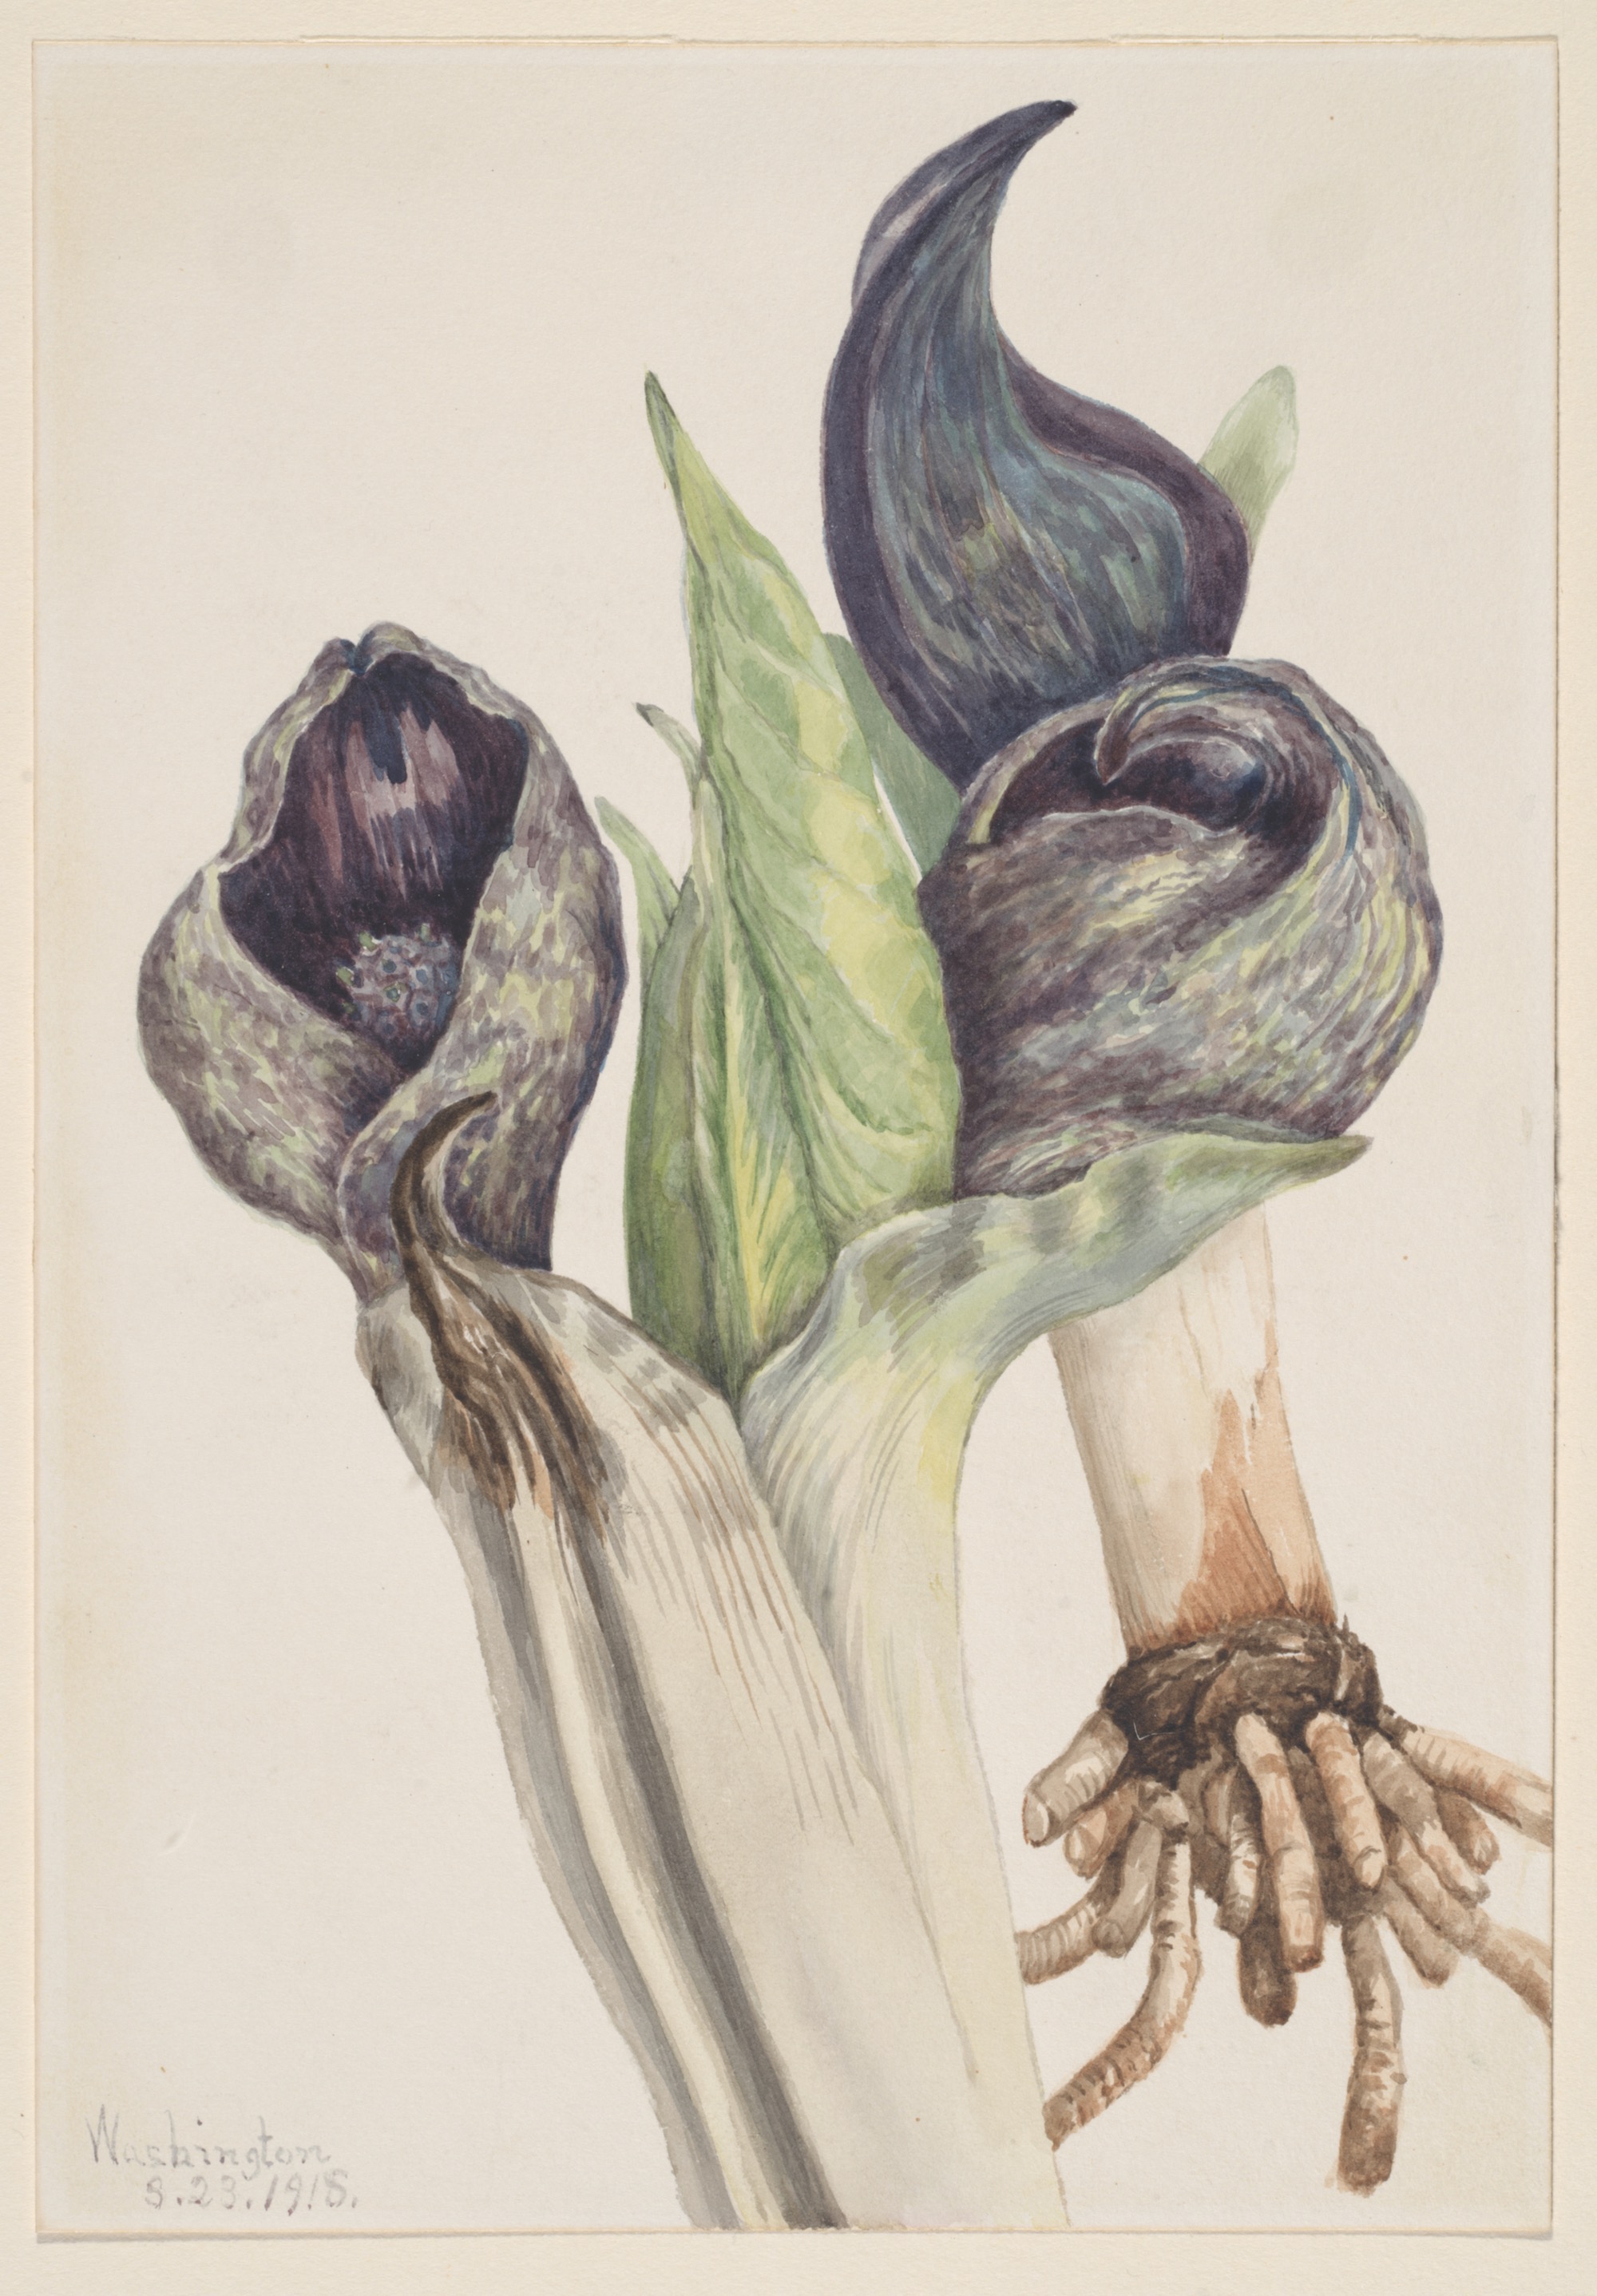 1918 Skunk Cabbage illustration by Mary Vaux Walcott.